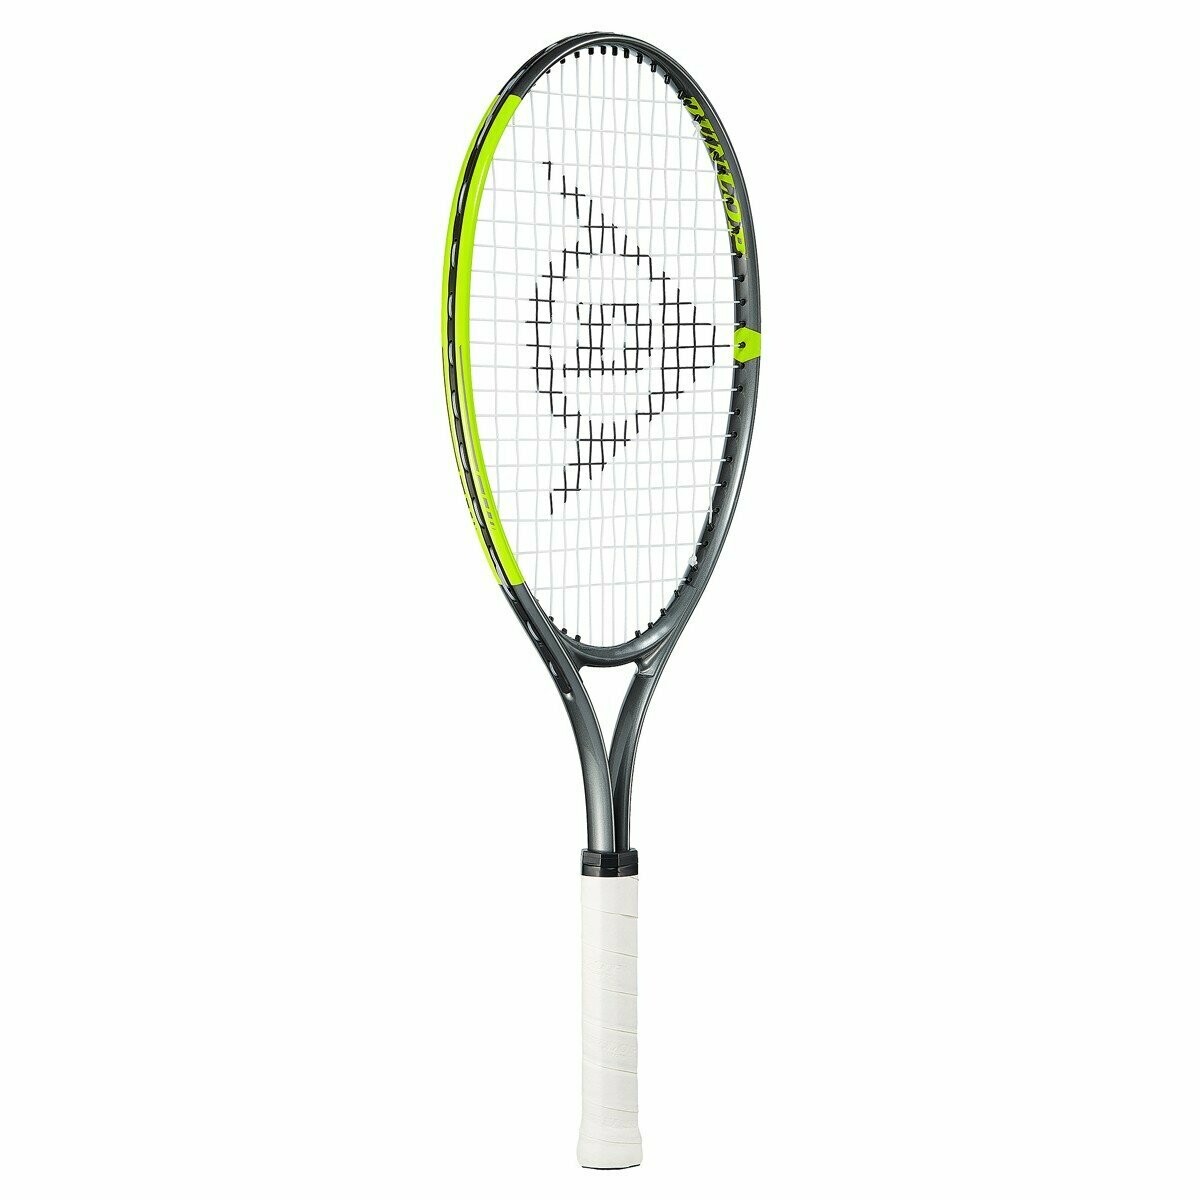 Dunlop cv team junior series pro tennis racket 24 inch with case